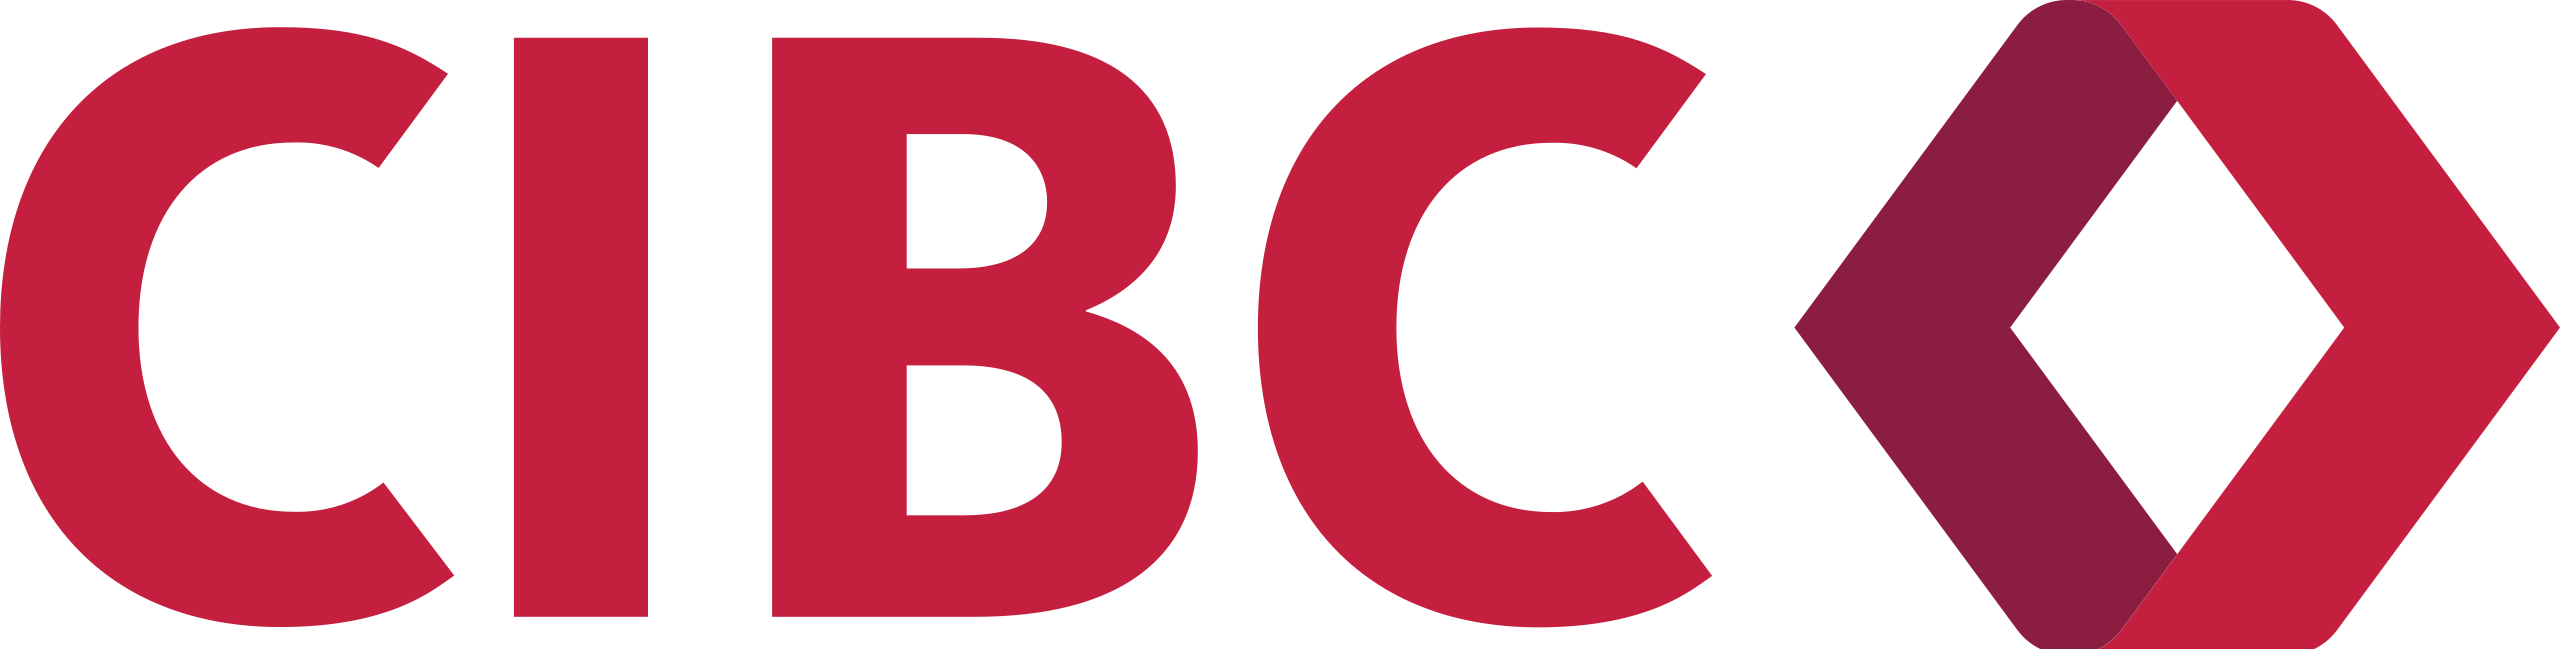 CIBC_logo_2021.svg